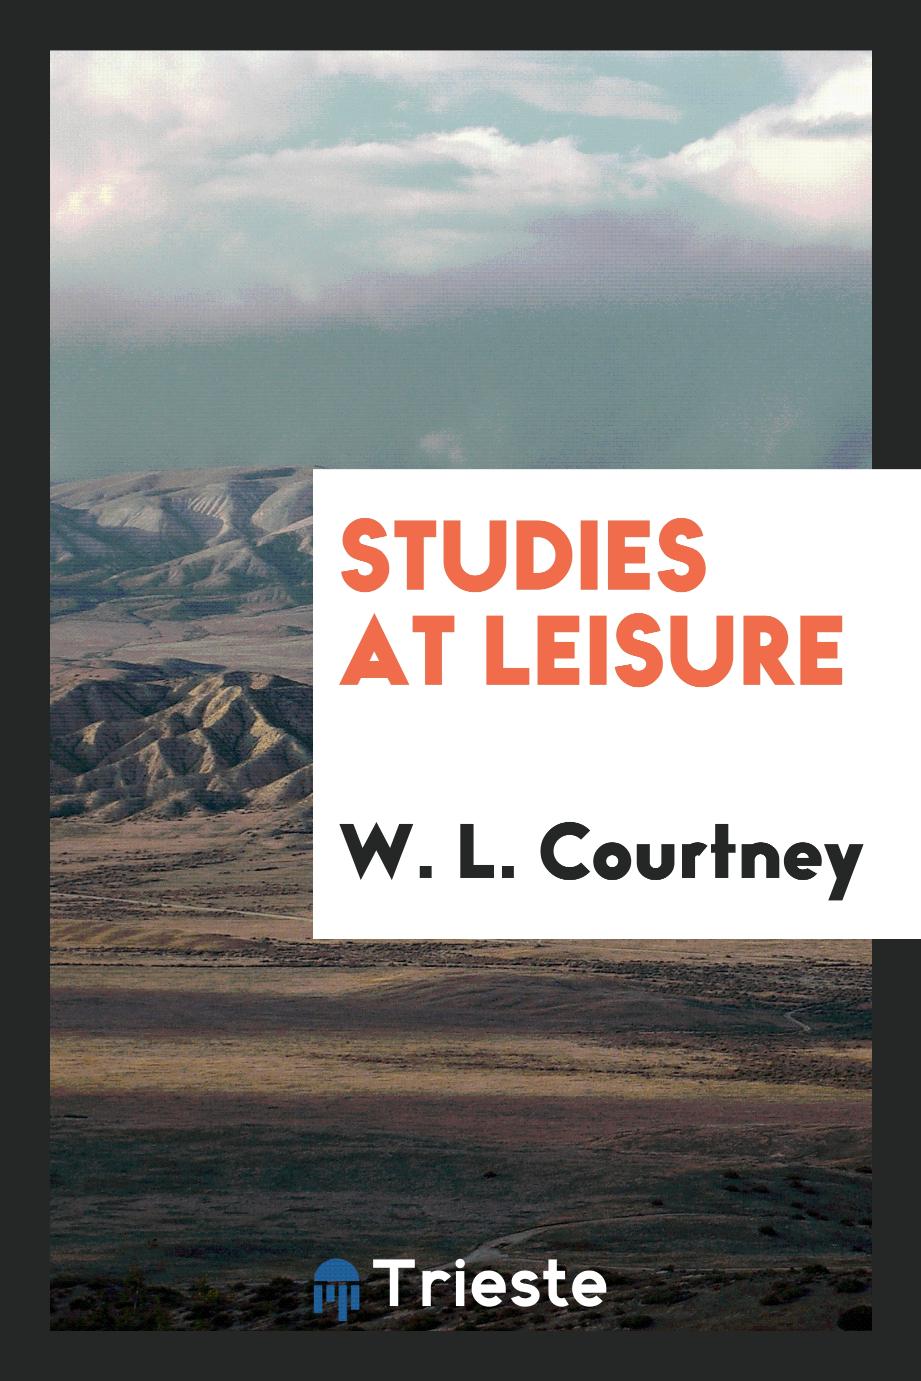 Studies at leisure